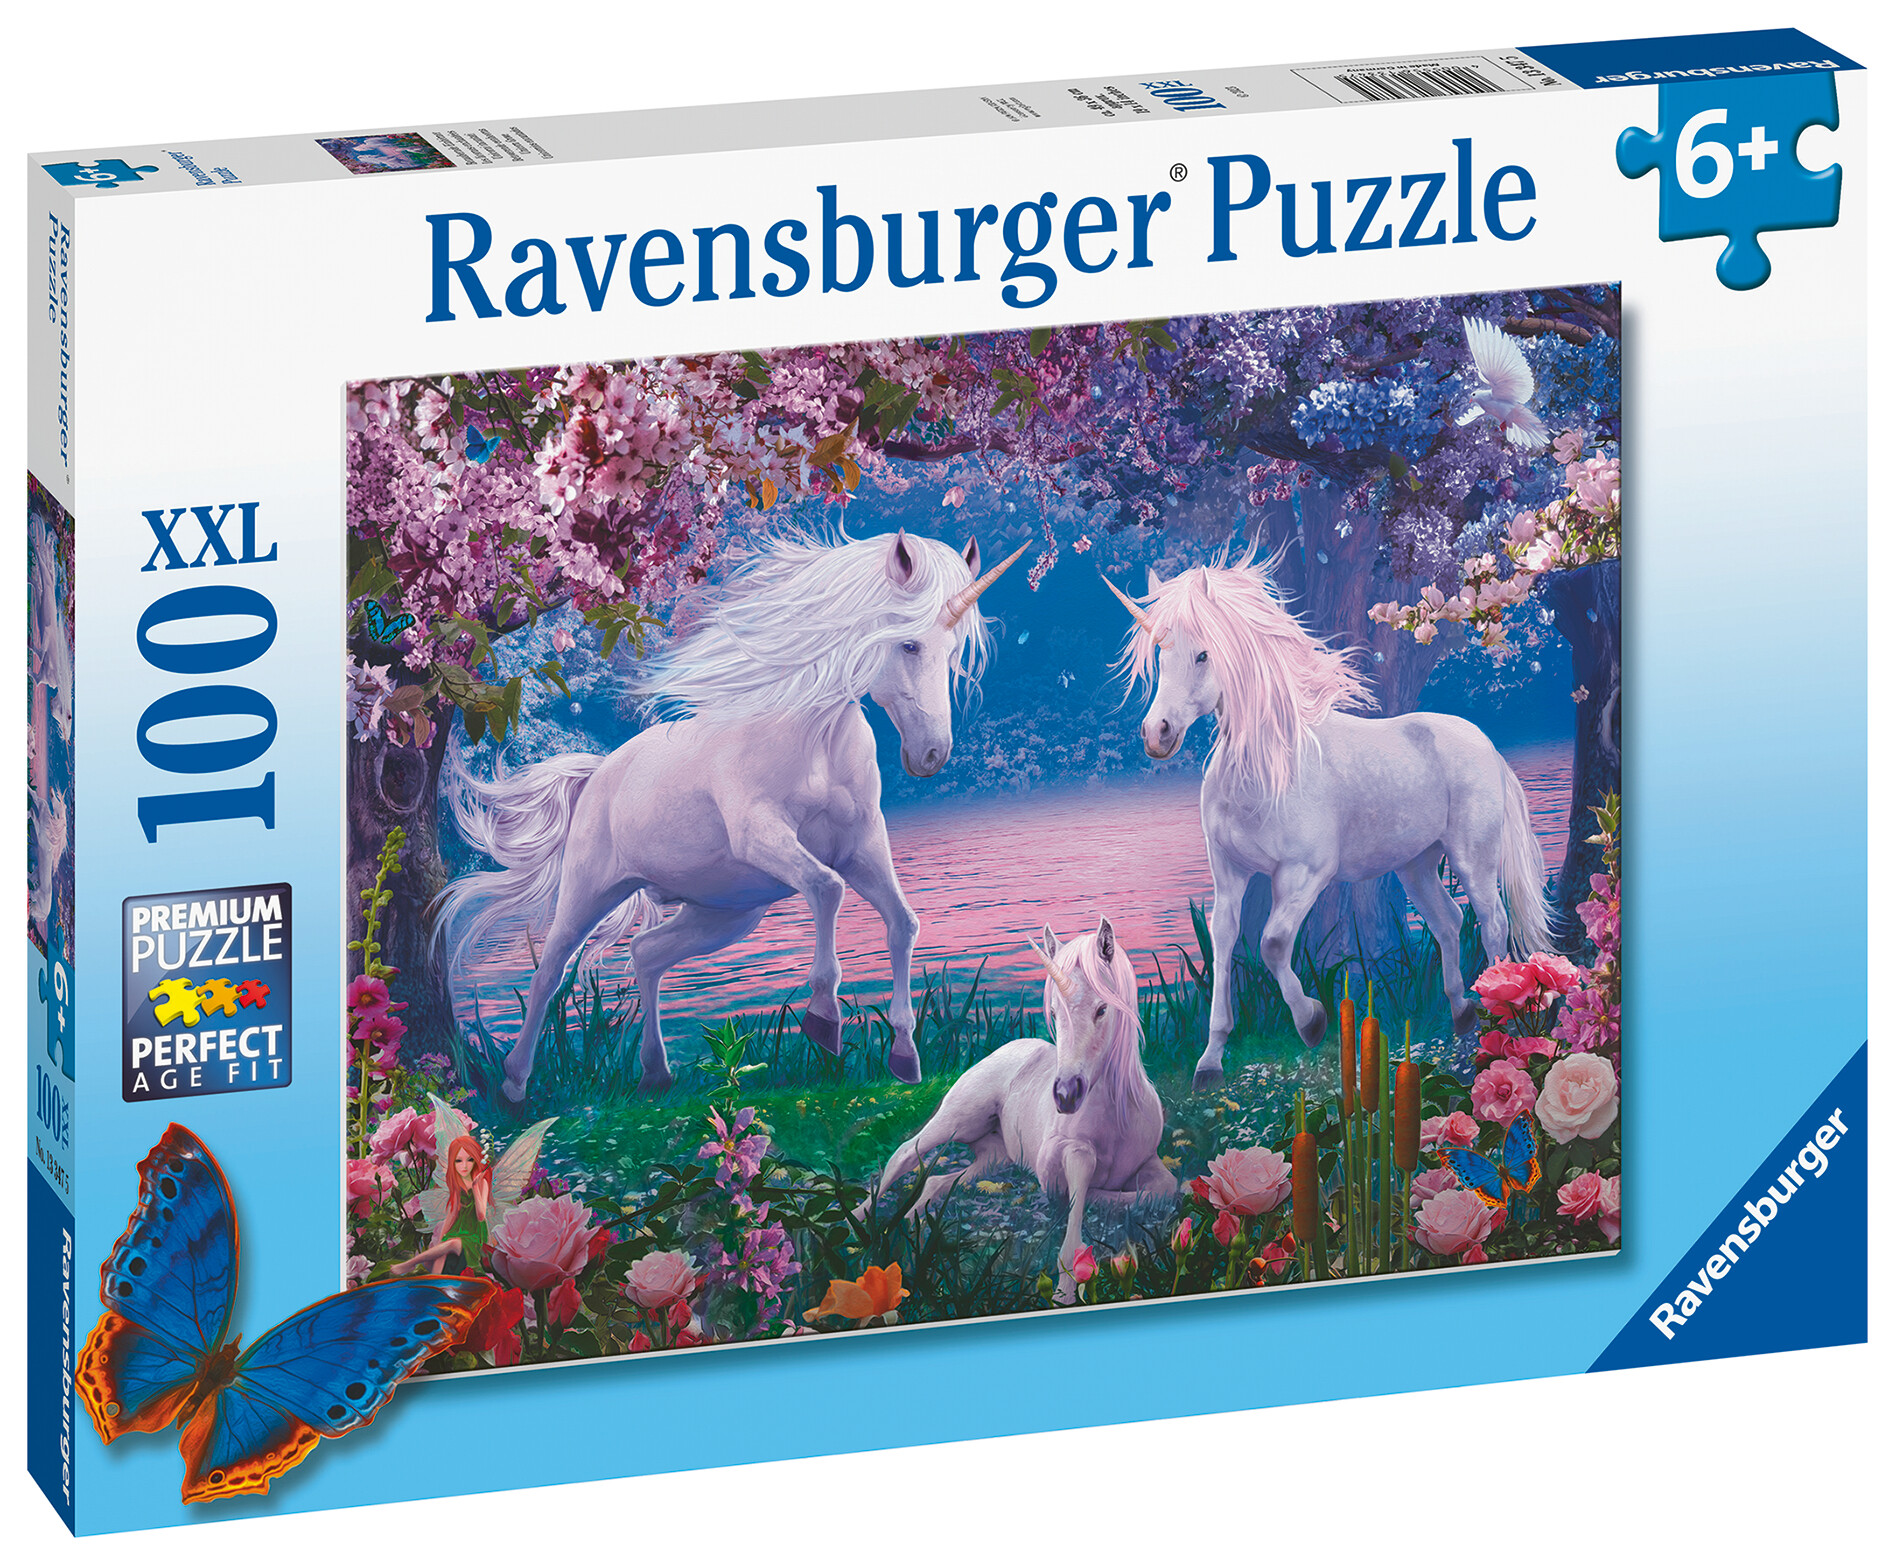 Ravensburger - puzzle unicorni incantati, 100 pezzi xxl, età raccomandata 6+ anni - RAVENSBURGER